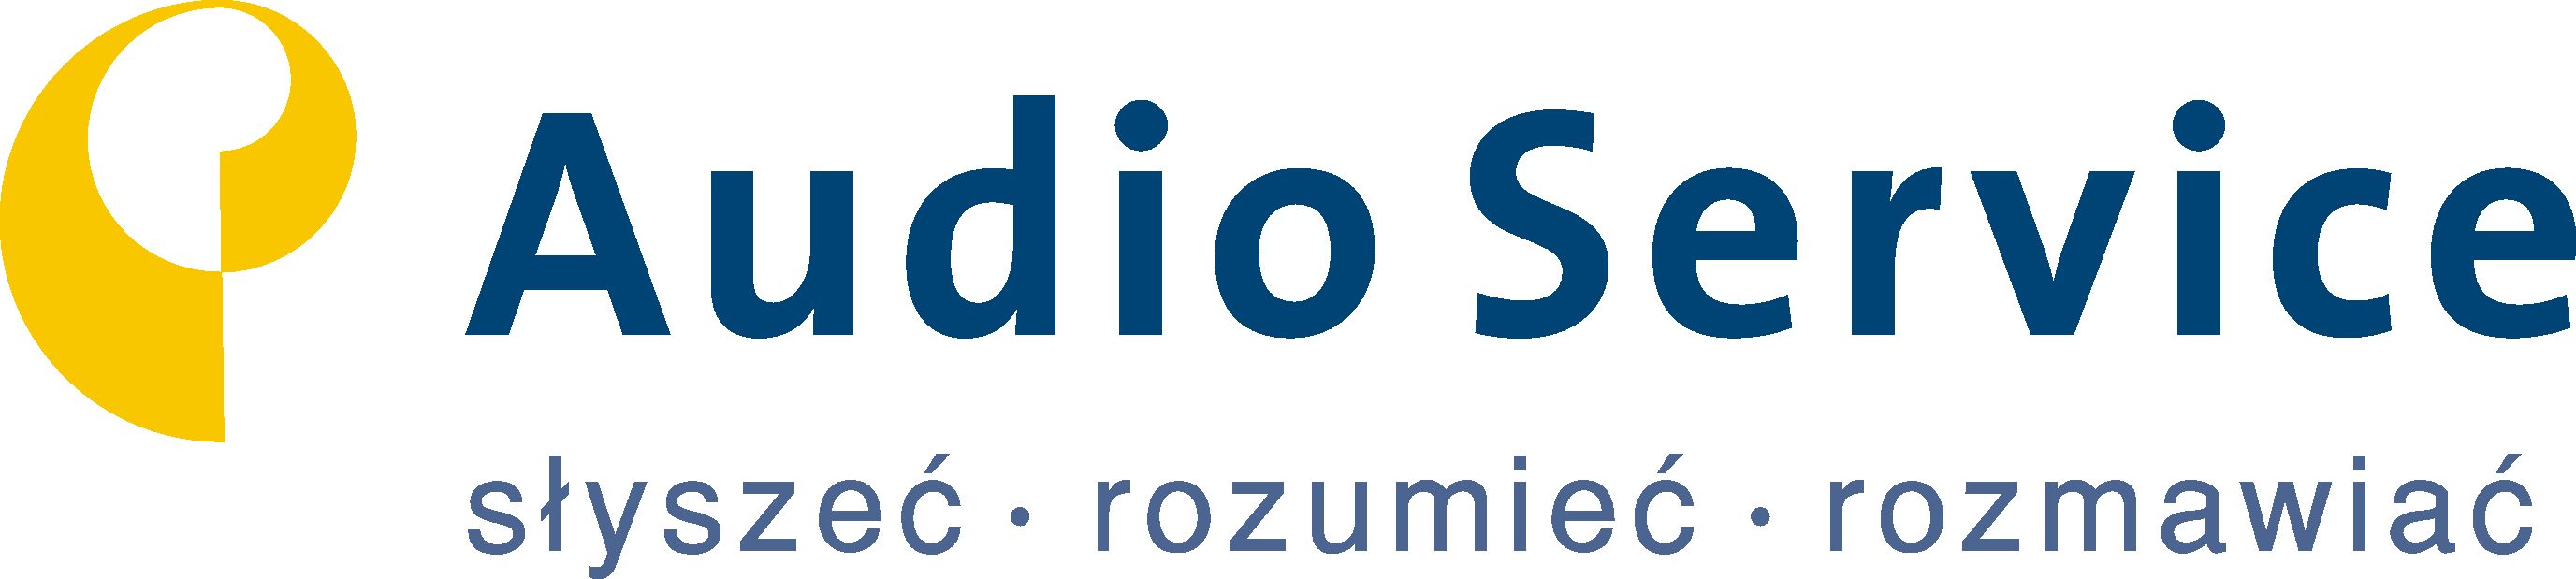 logo_AUDIOSERVICE